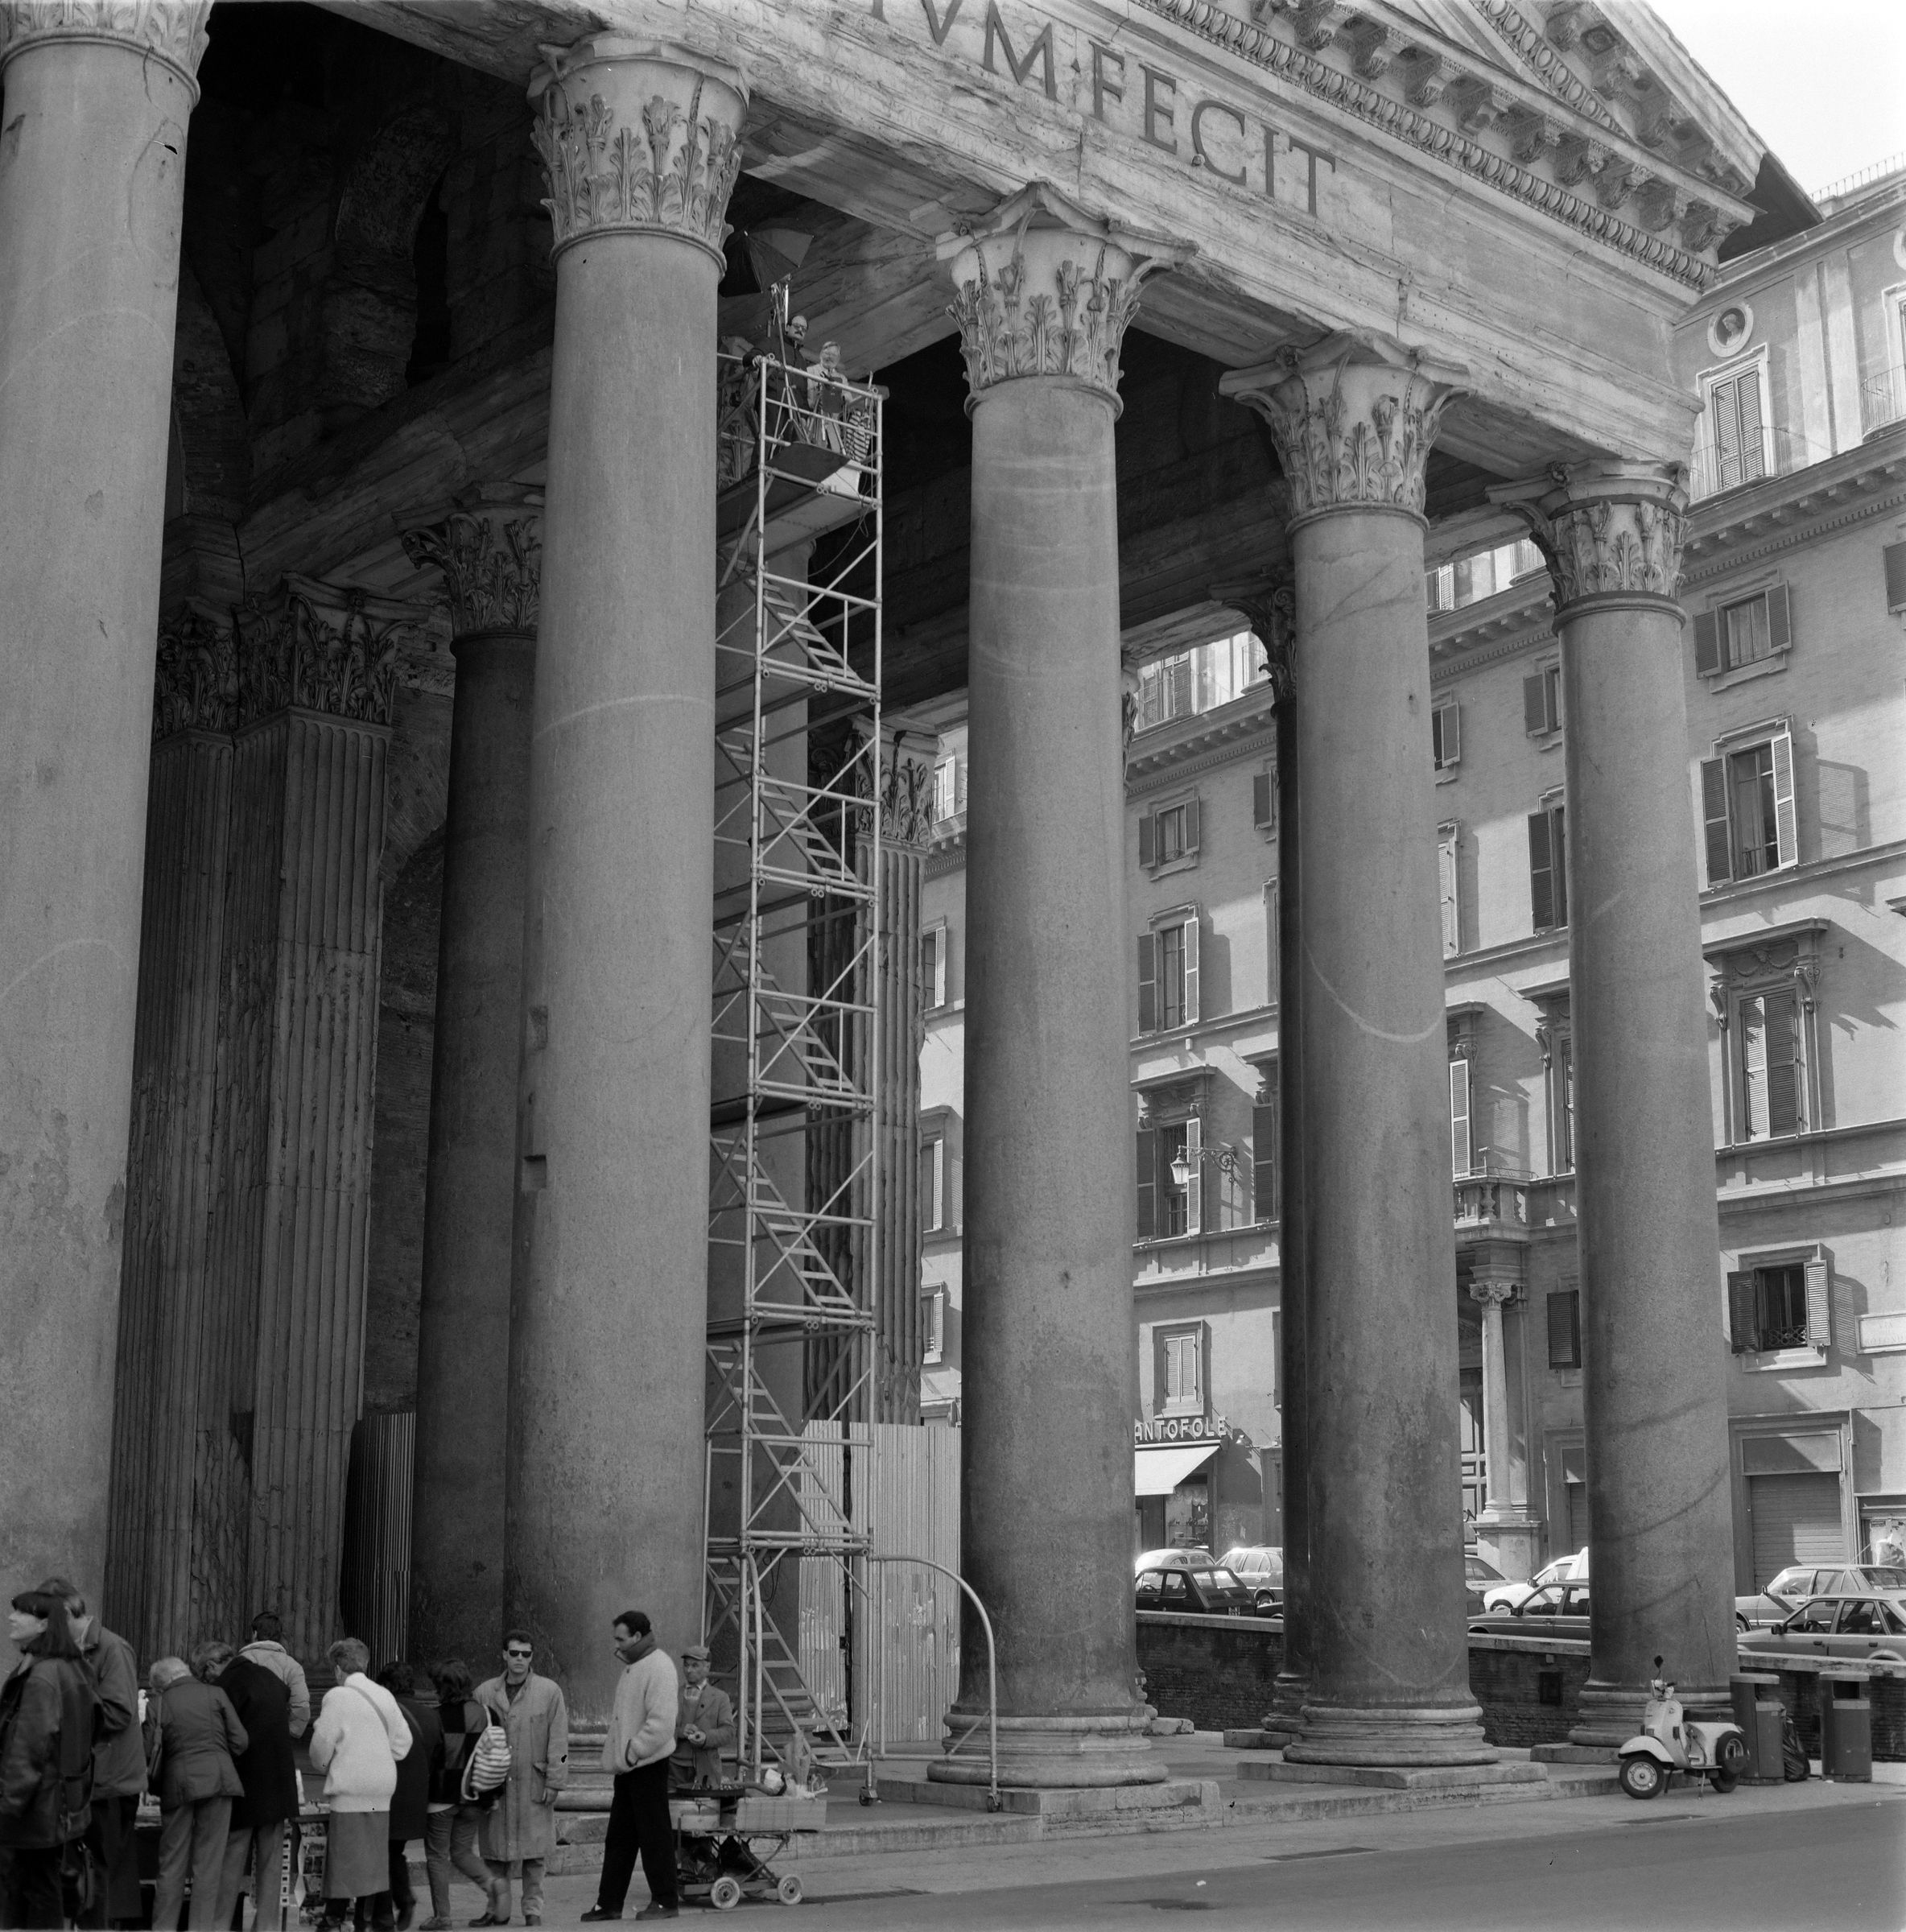 Fotografo non identificato, Pantheon; Pantheon (Chiesa di S. Maria ad Martyres), 1951-2000, gelatina ai sali d'argento, 6x6 cm, N078307